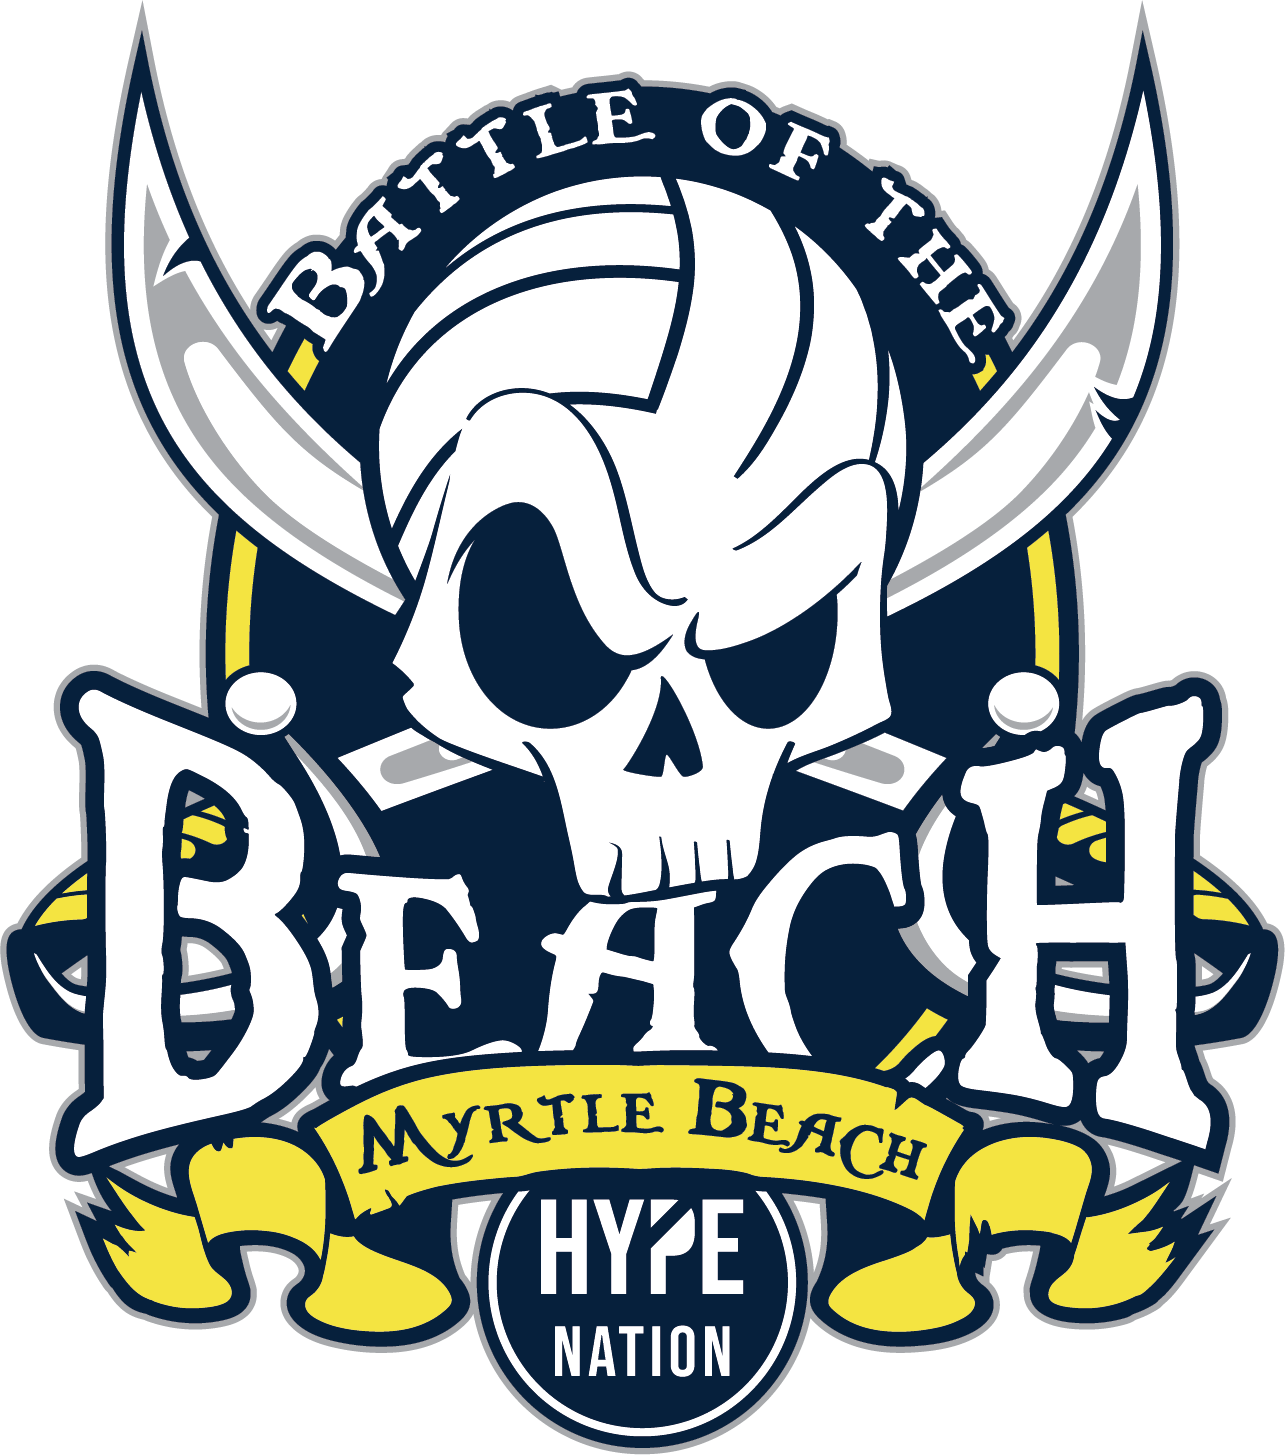 Battle of the Beach